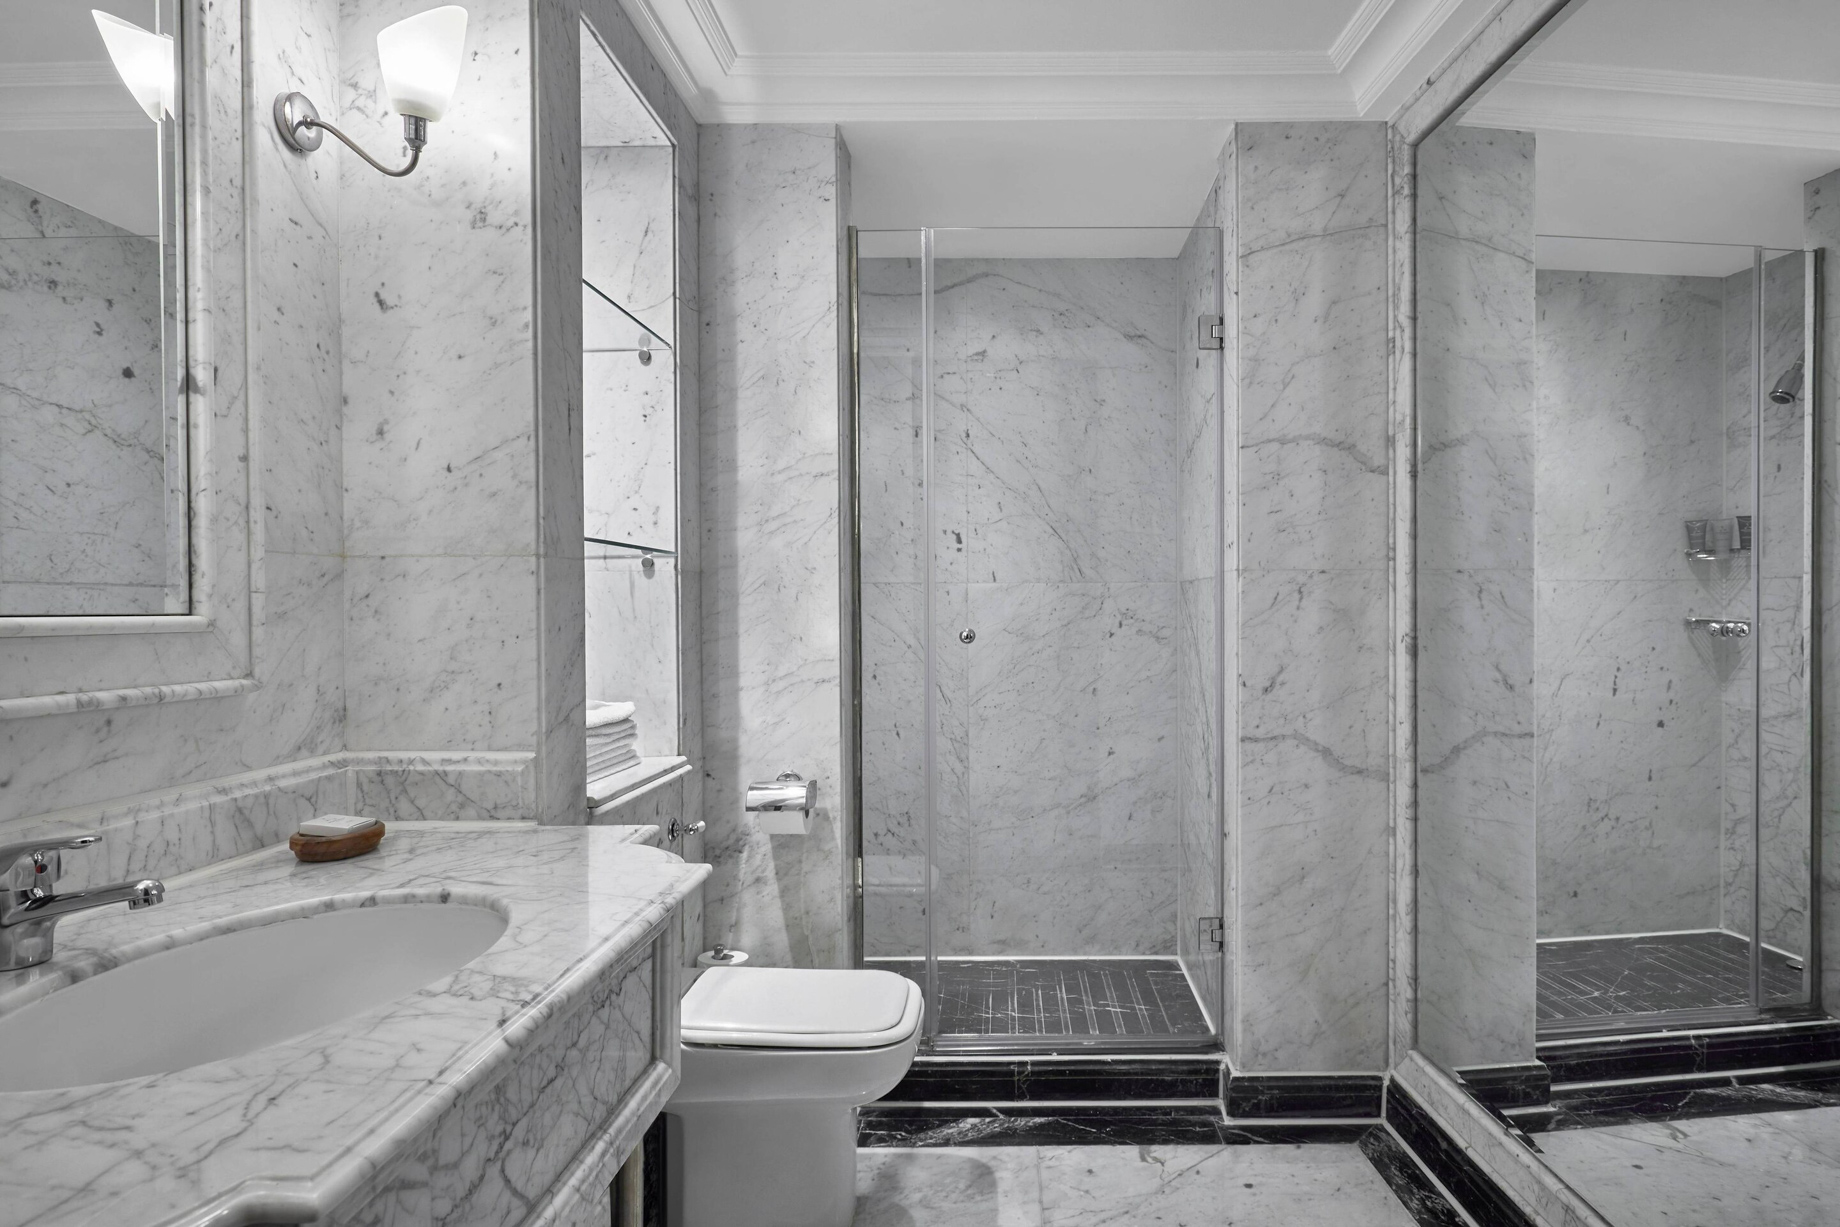 JW Marriott Hotel Cairo – Cairo, Egypt – Diplomatic Suite Bathroom Shower